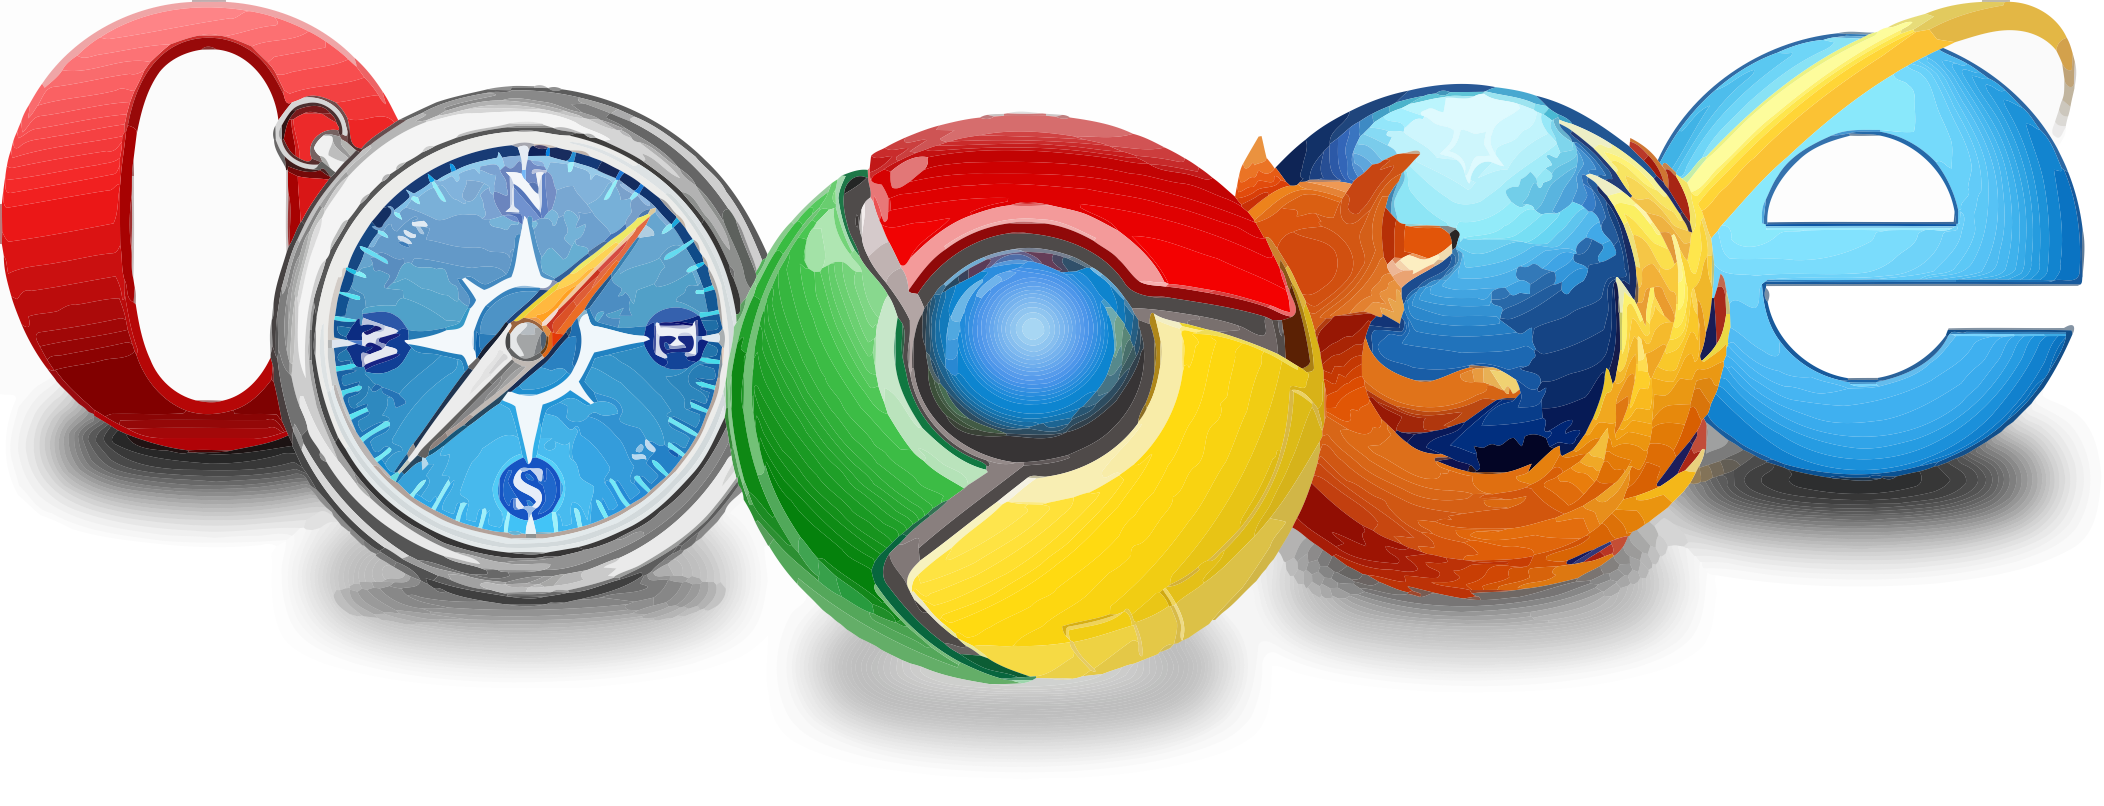 internet clipart web browser